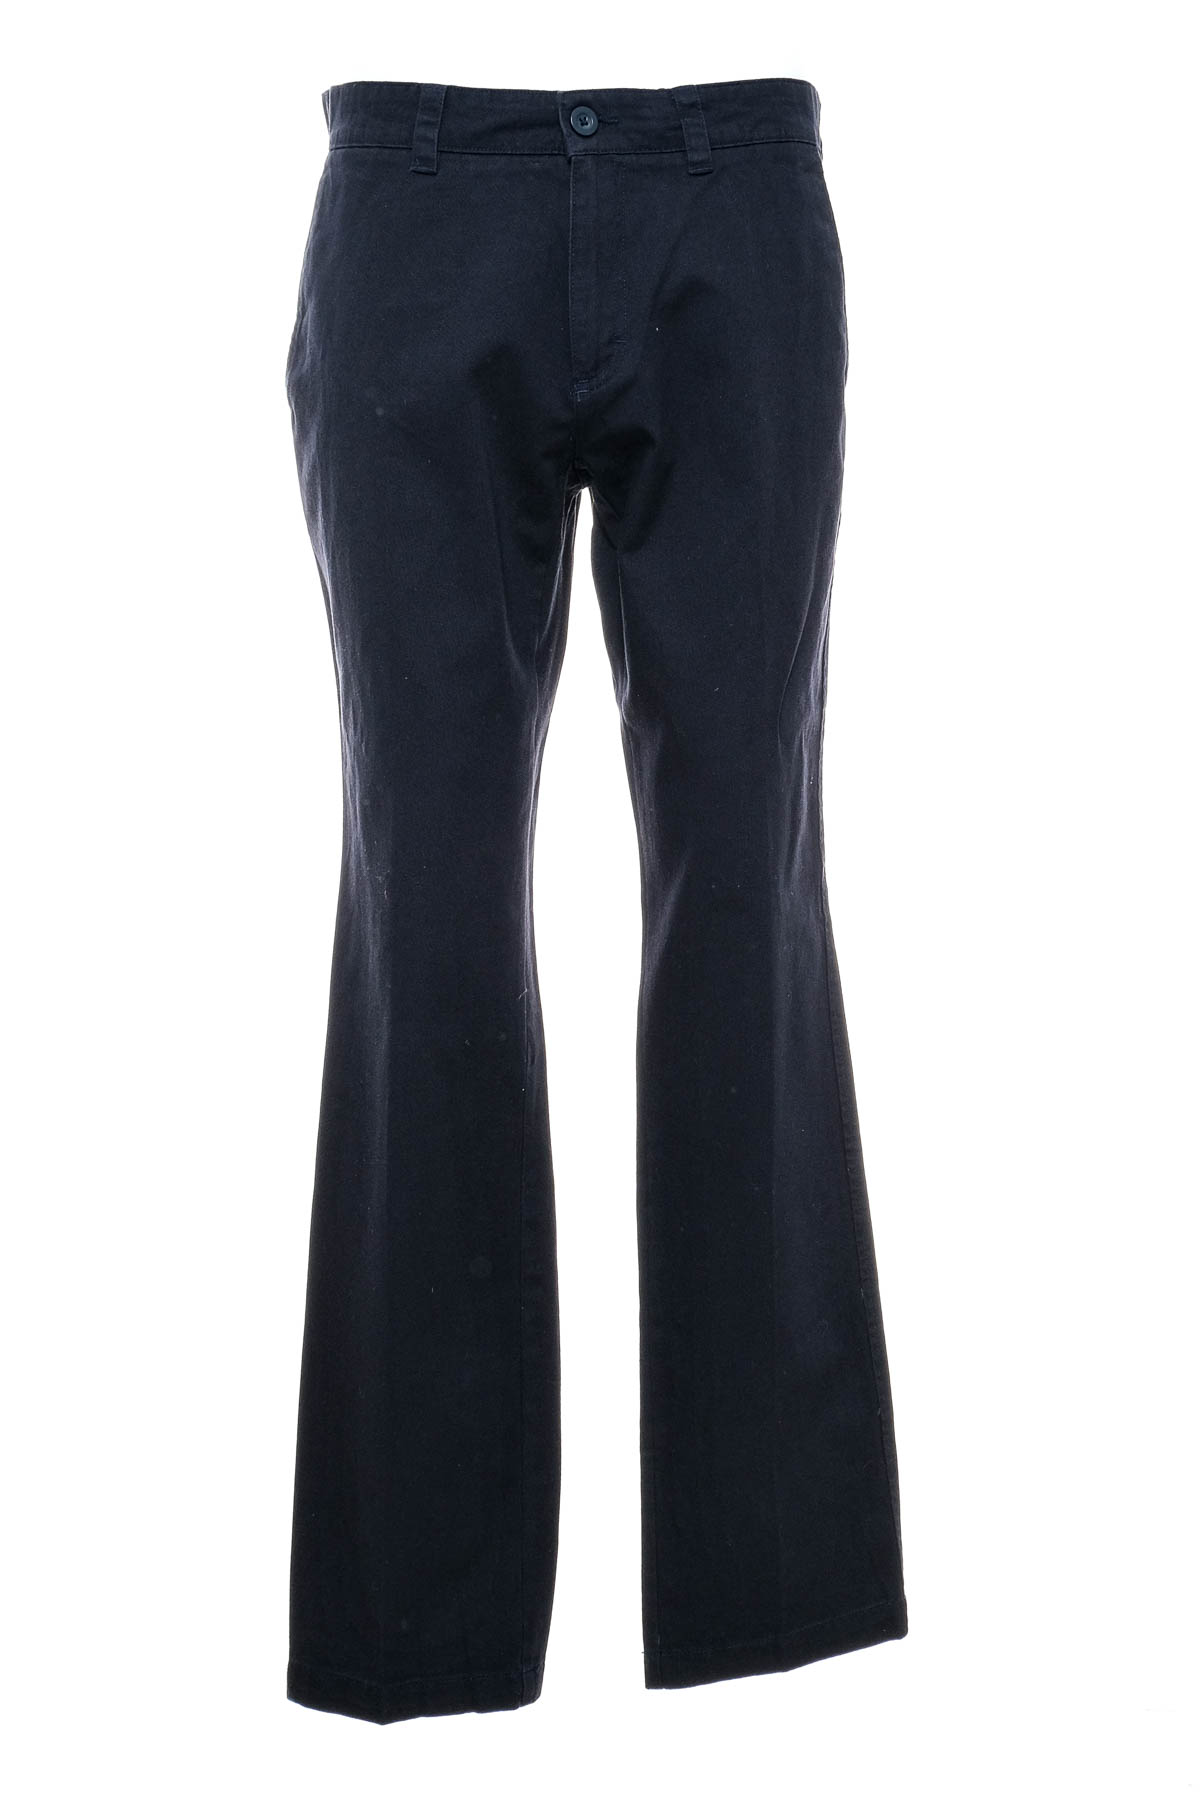 Men's trousers - DECATHLON - 0